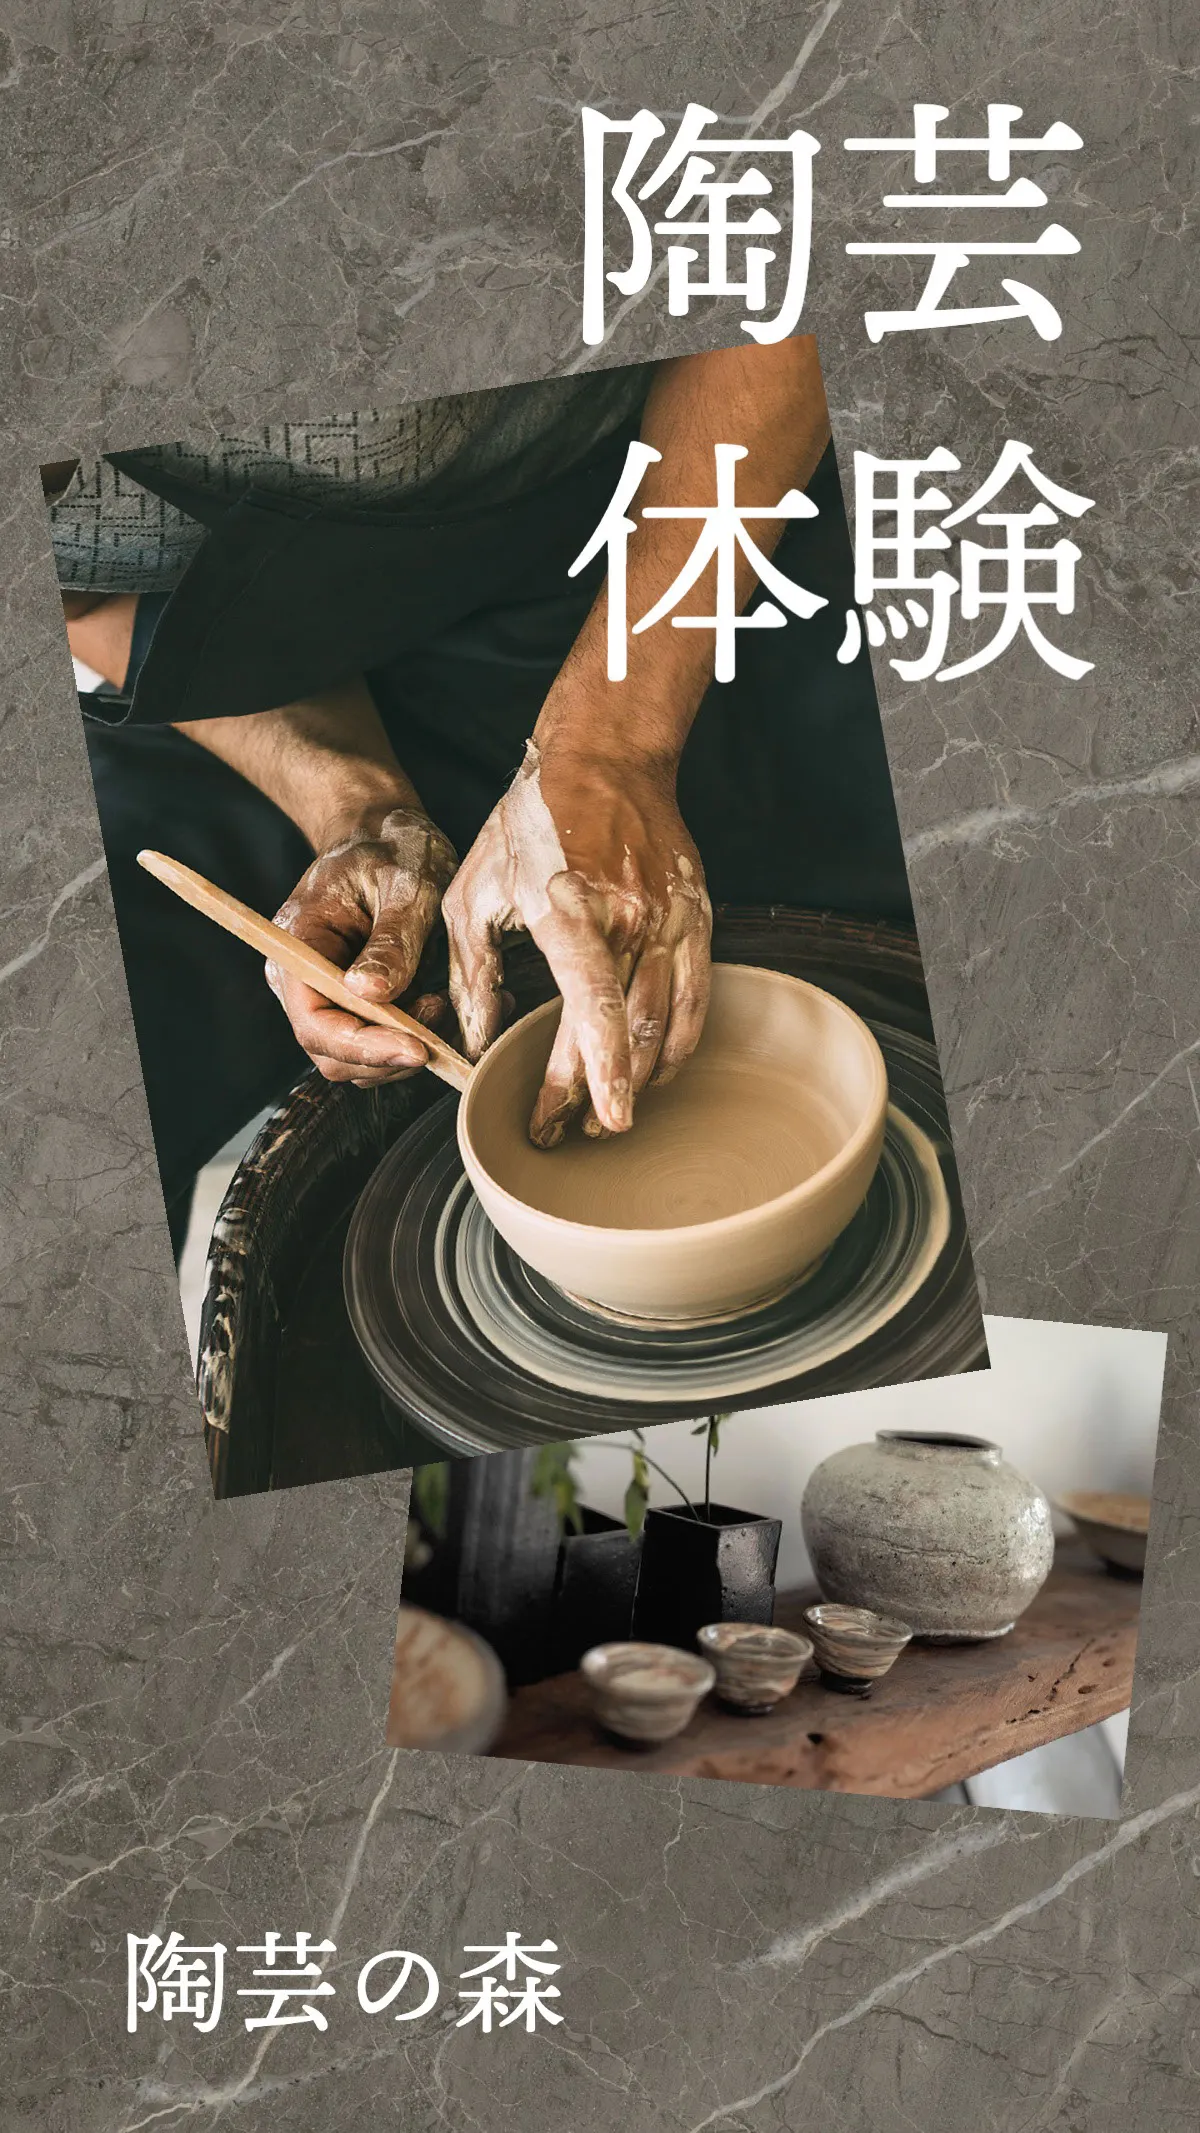 Ceramic art experience ad facebook story